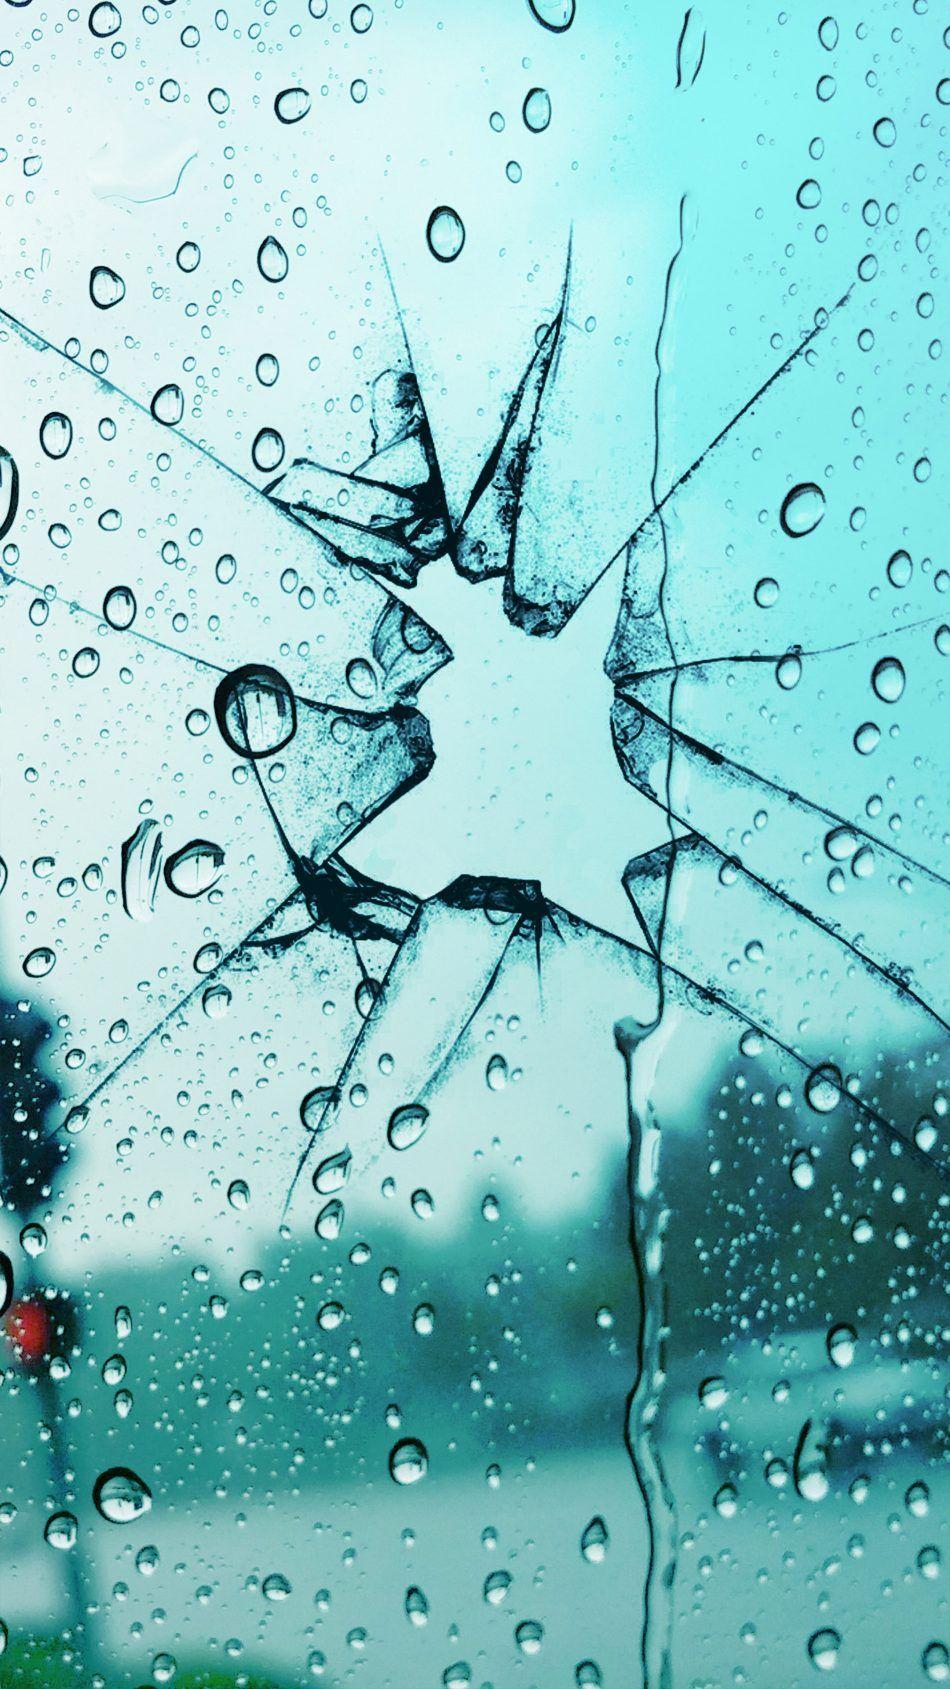 Broken Glass Rain Drops